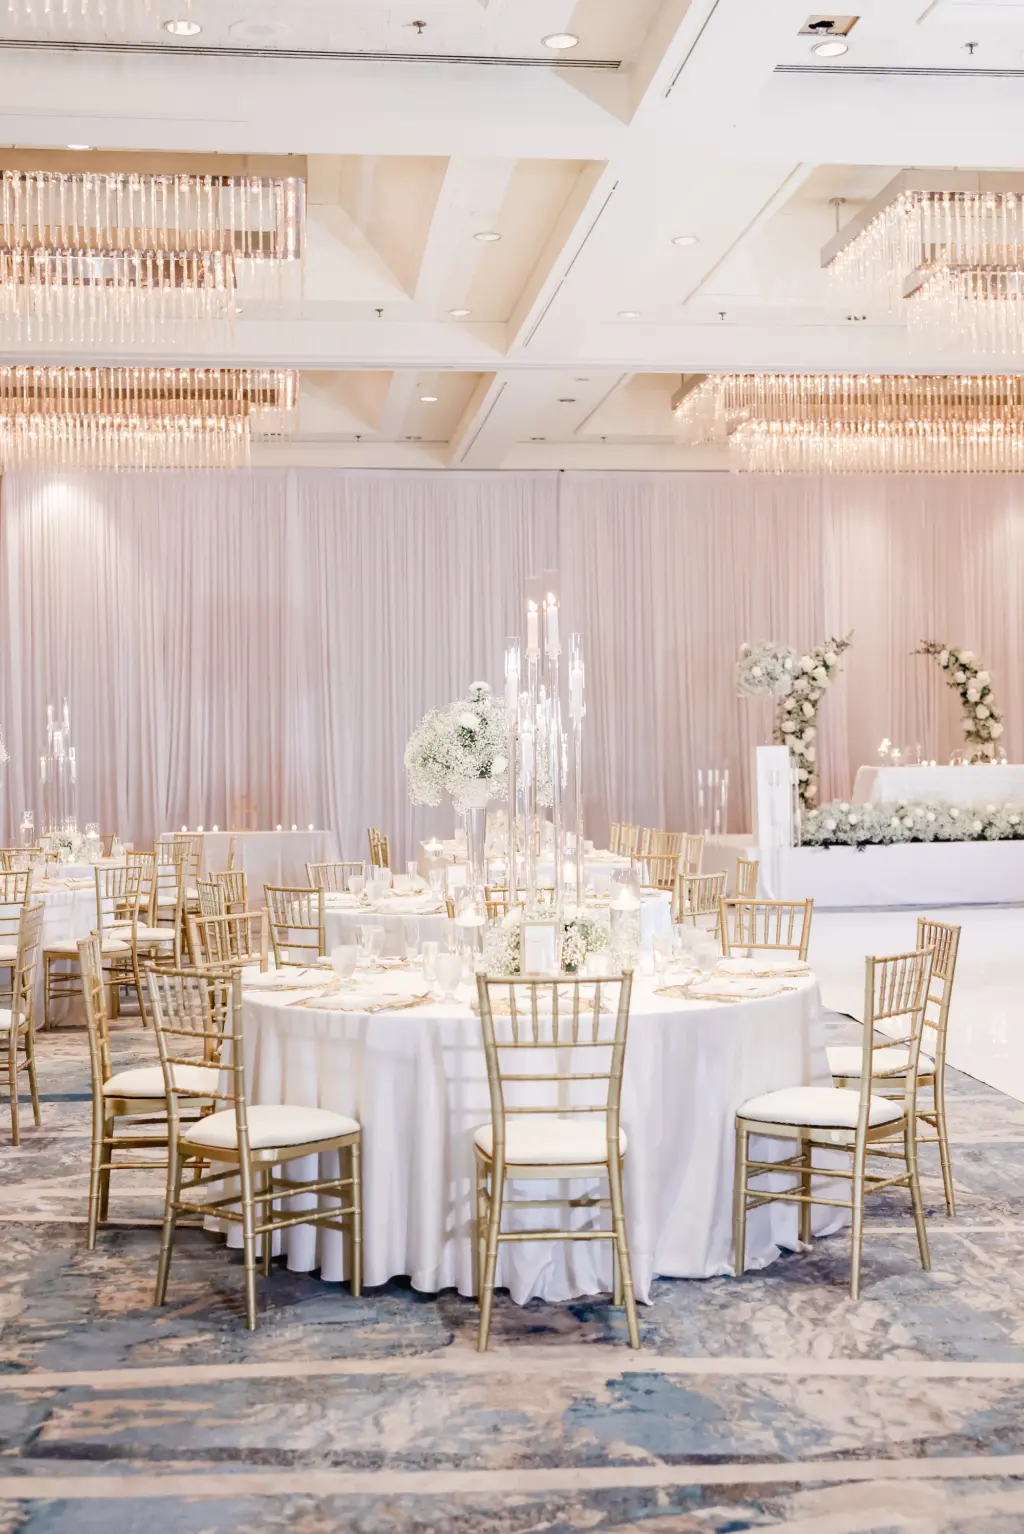 Elegant White Hilton Tampa Downtown Wedding Reception Venue | Photographer Lifelong Photography Studio